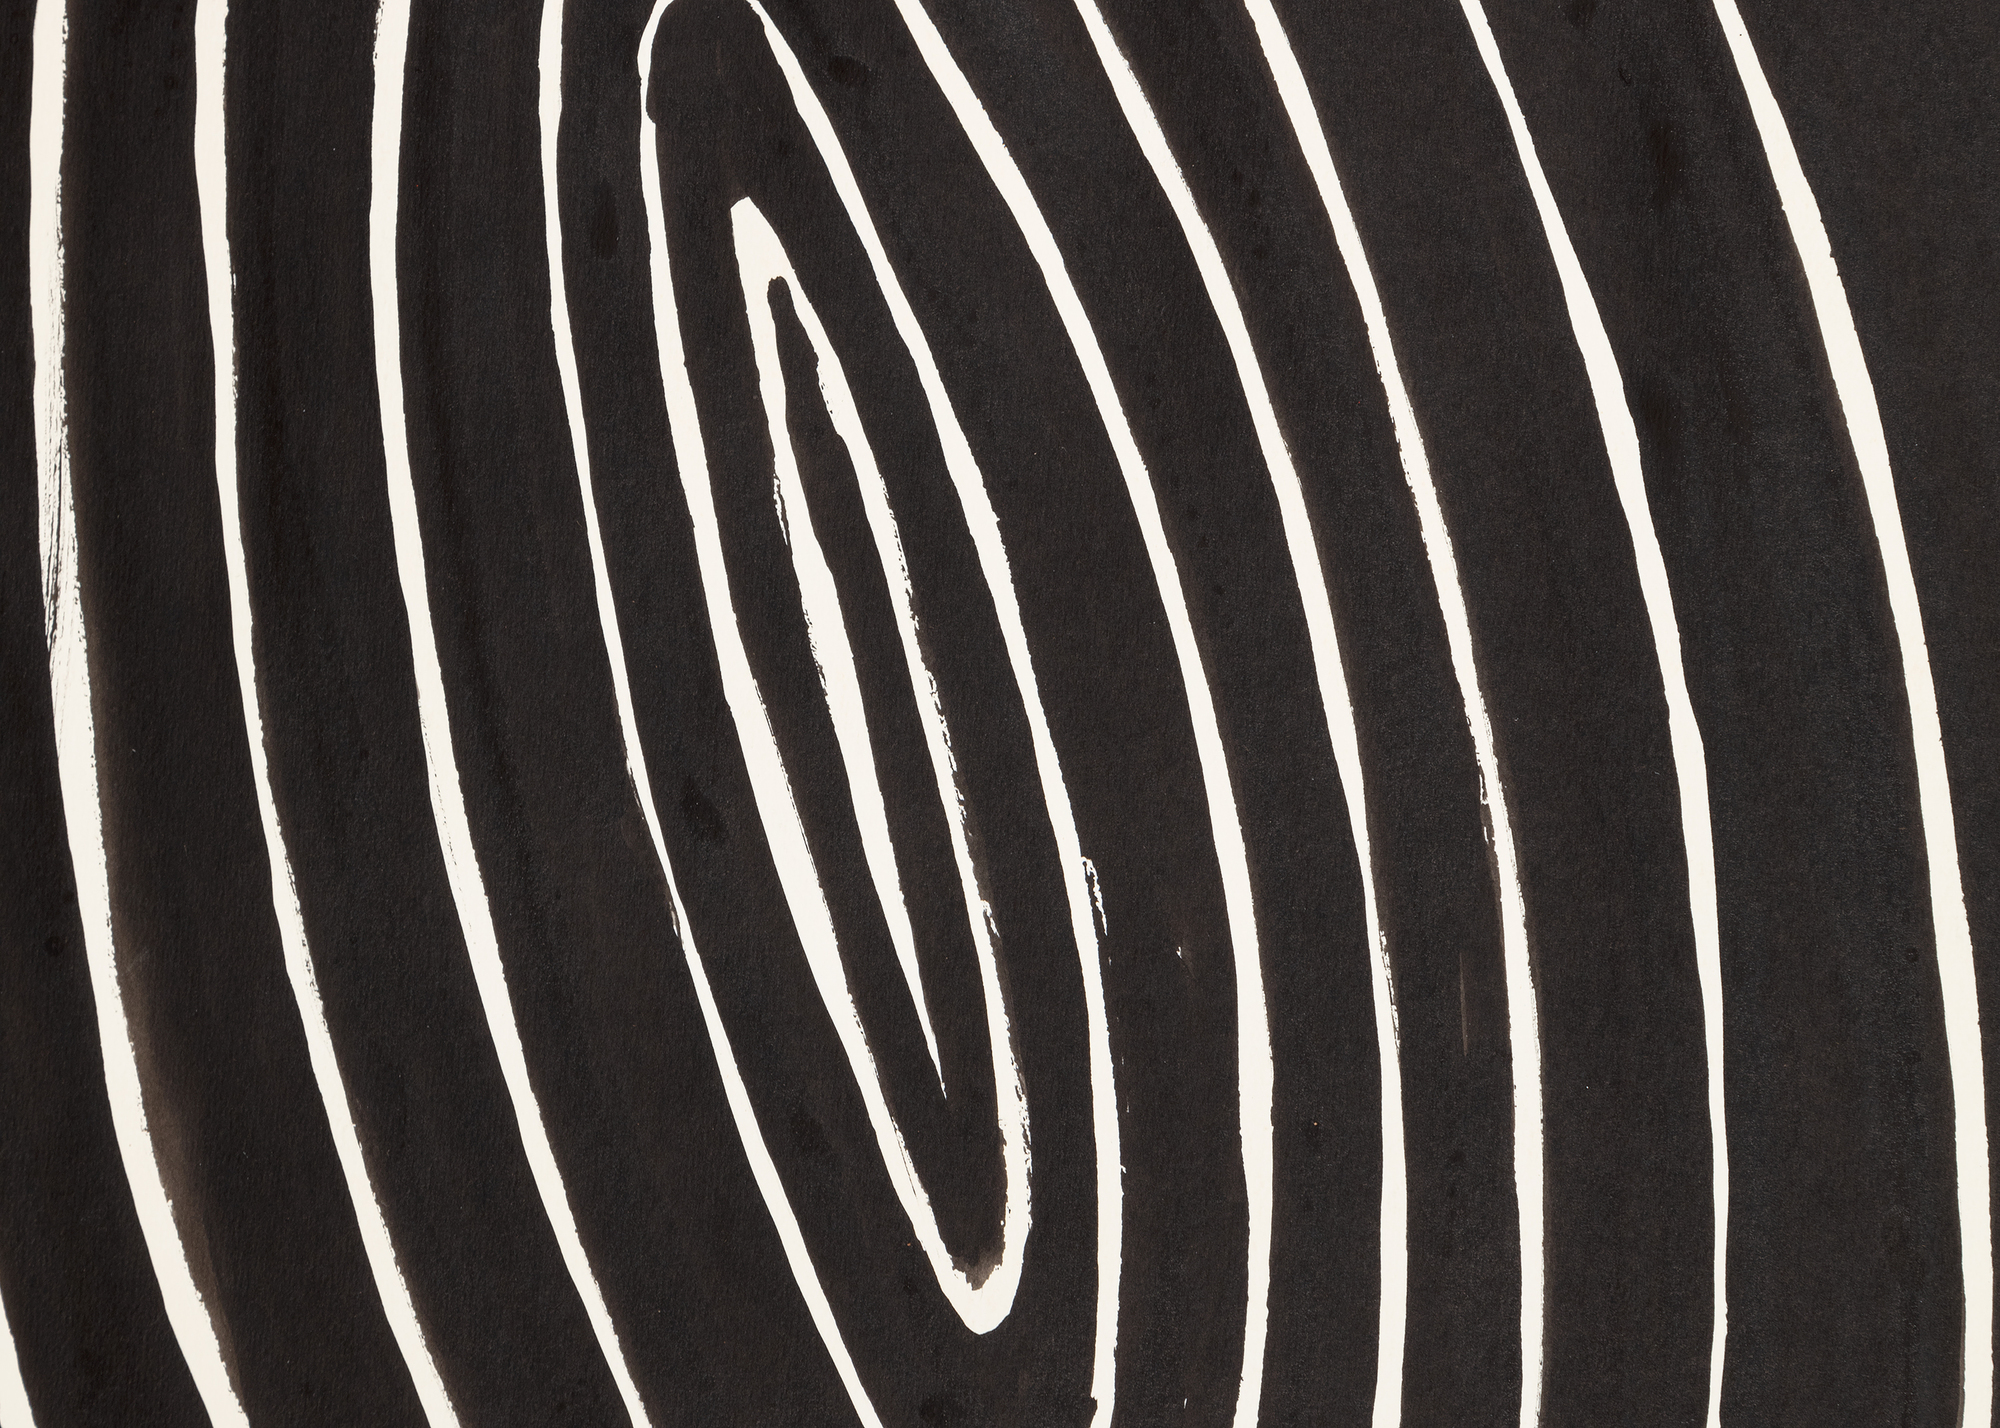 ALEXANDER CALDER - The Oval Spiral - 紙にガッシュ、インク - 43 1/4 x 29 1/2 in.